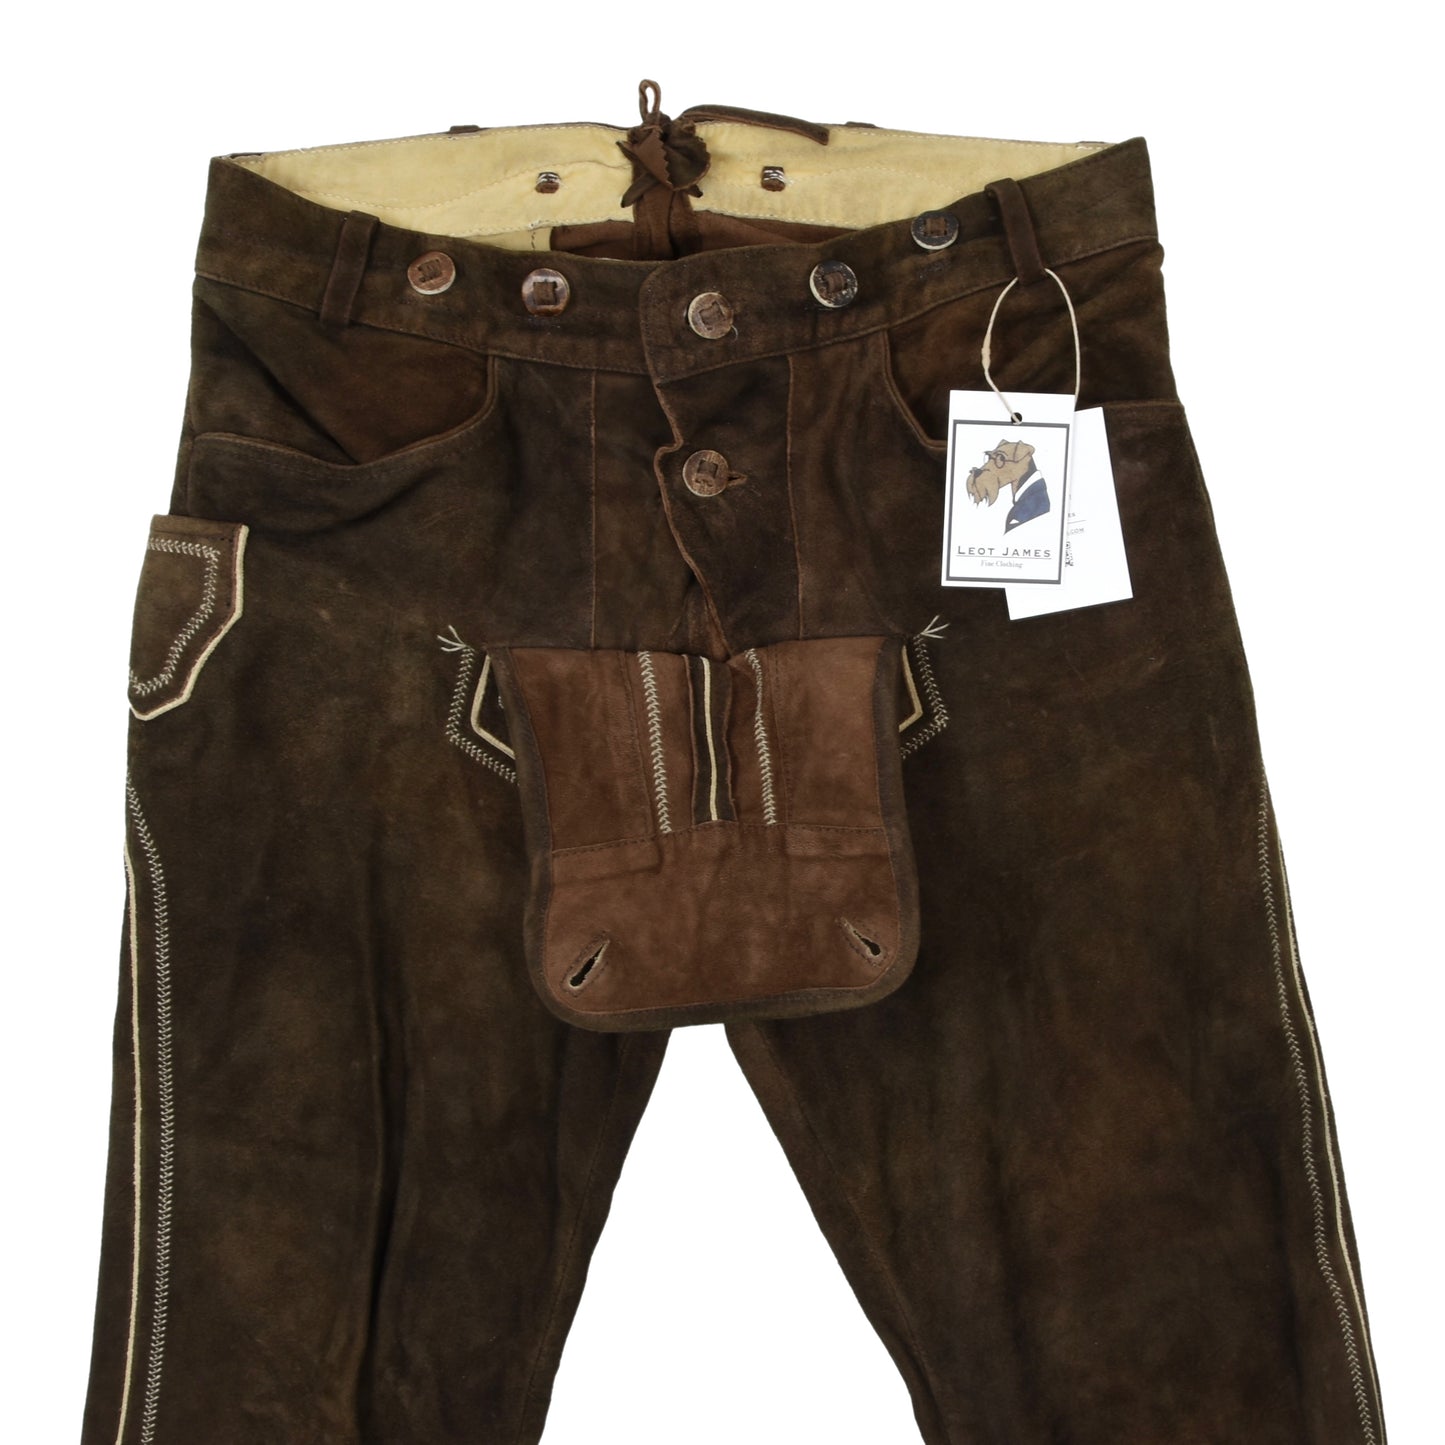 Spieth & Wensky Wild Bock Suede Lederhose/Pants Size 50 - Brown